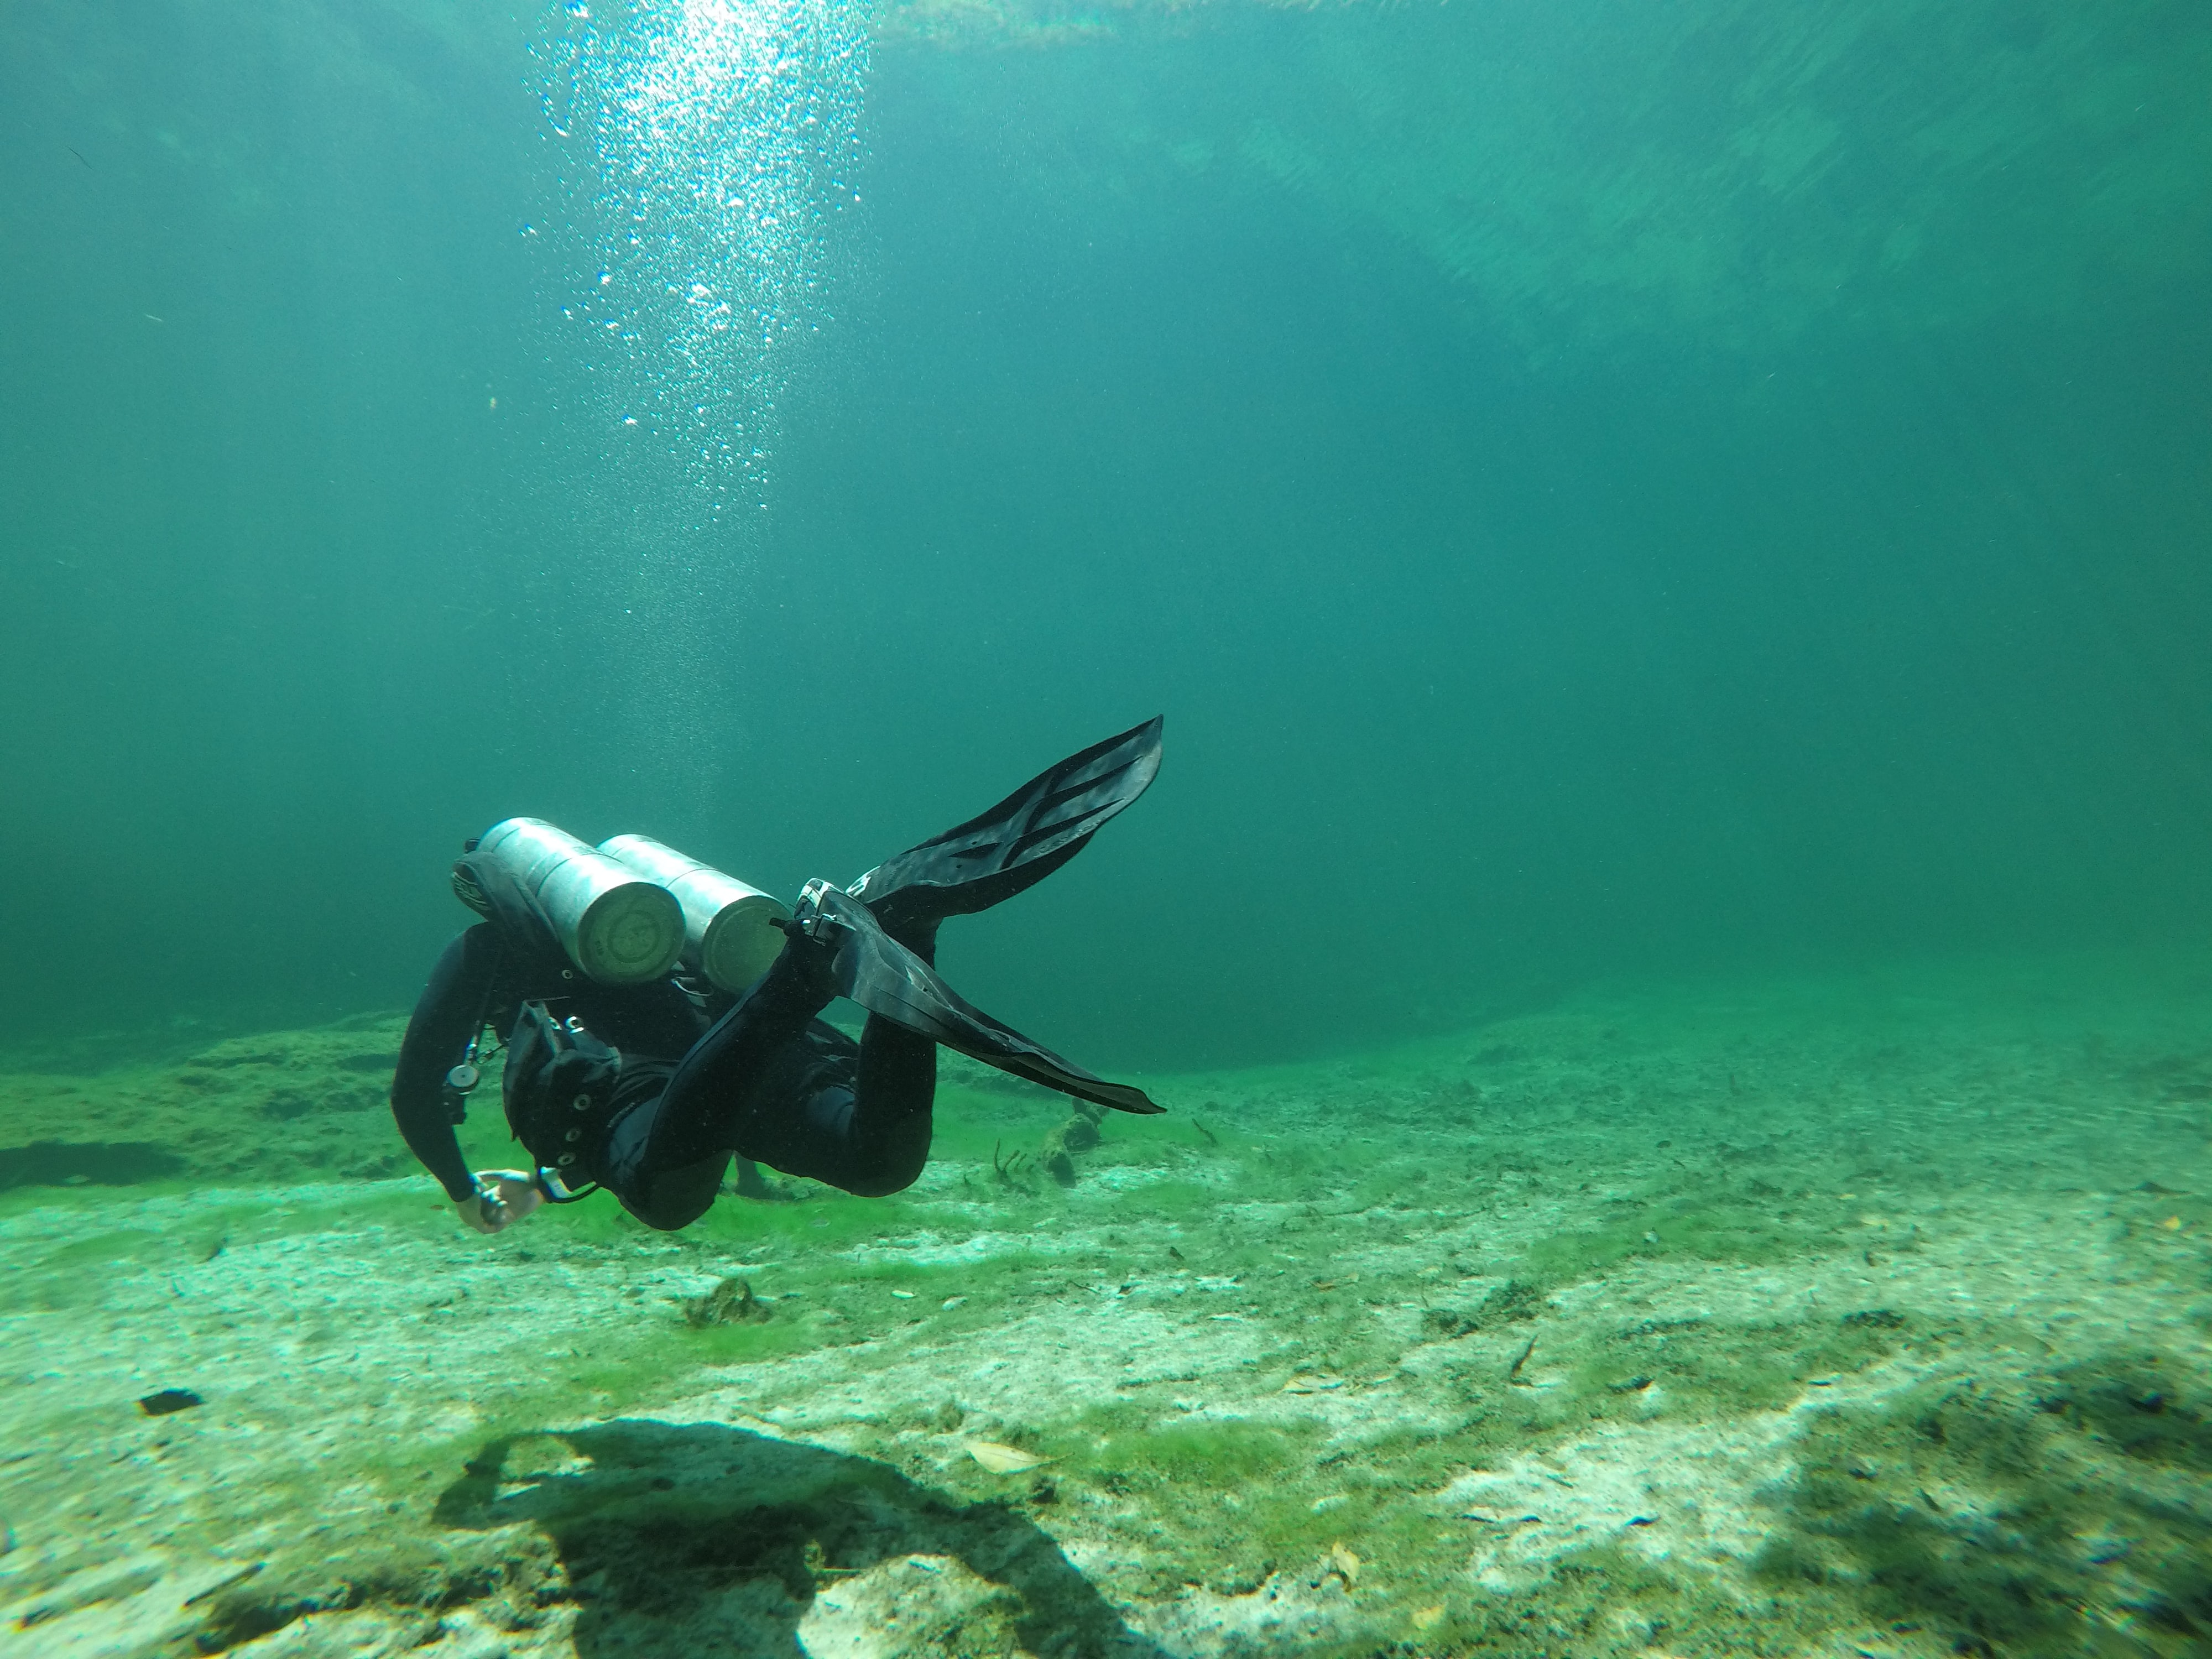 Scuba diver in Cancun exploring the underwater statues